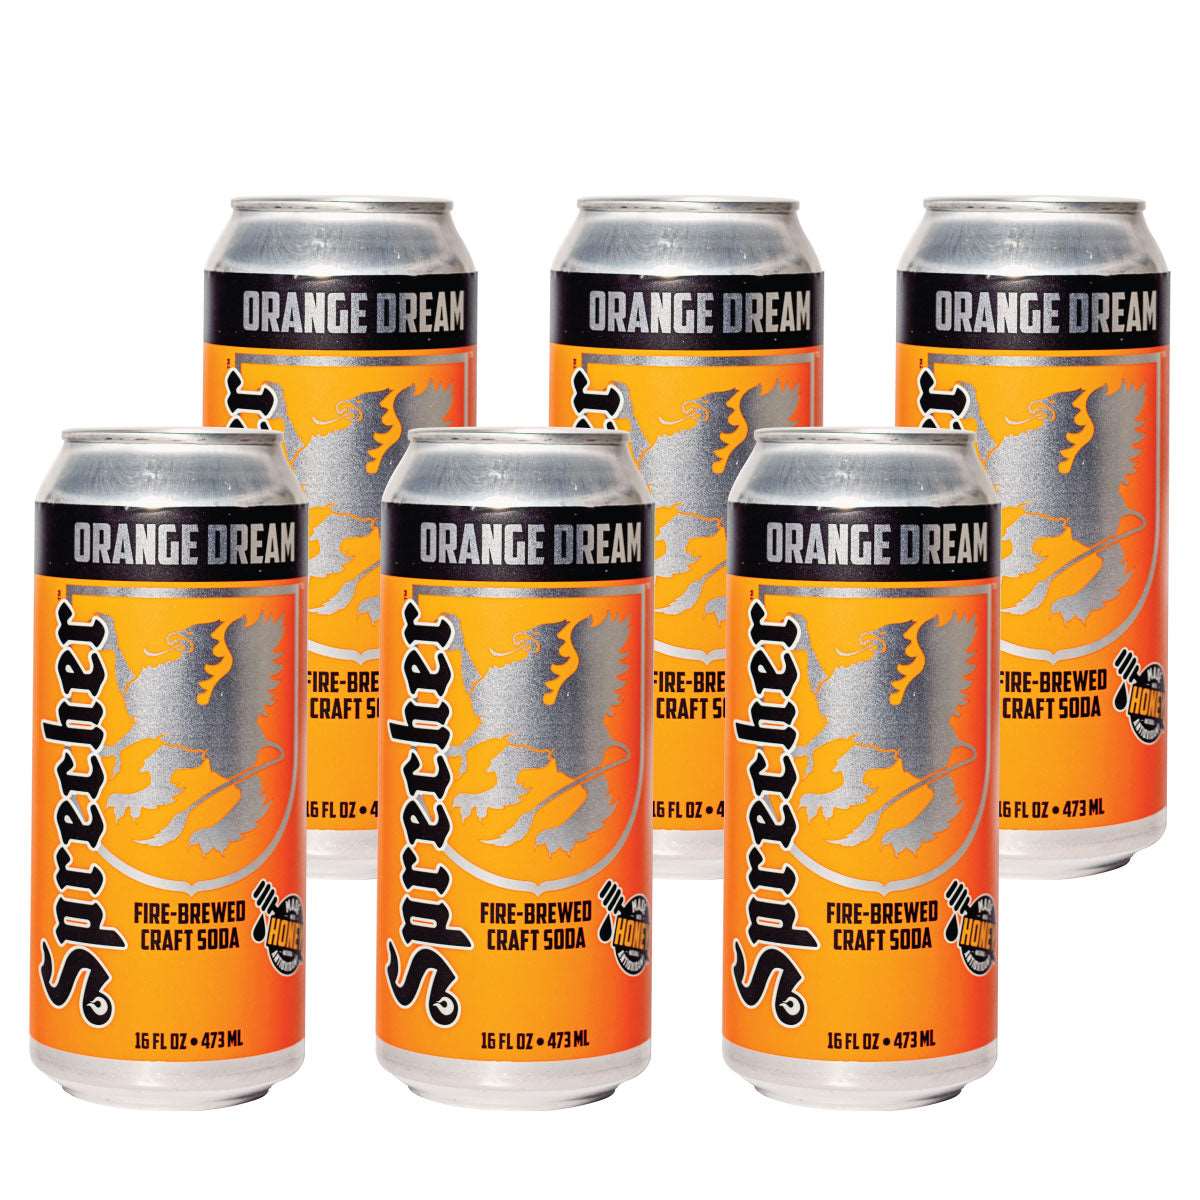 6 16oz cans of Sprecher Orange Dream Fire-Brewed craft soda